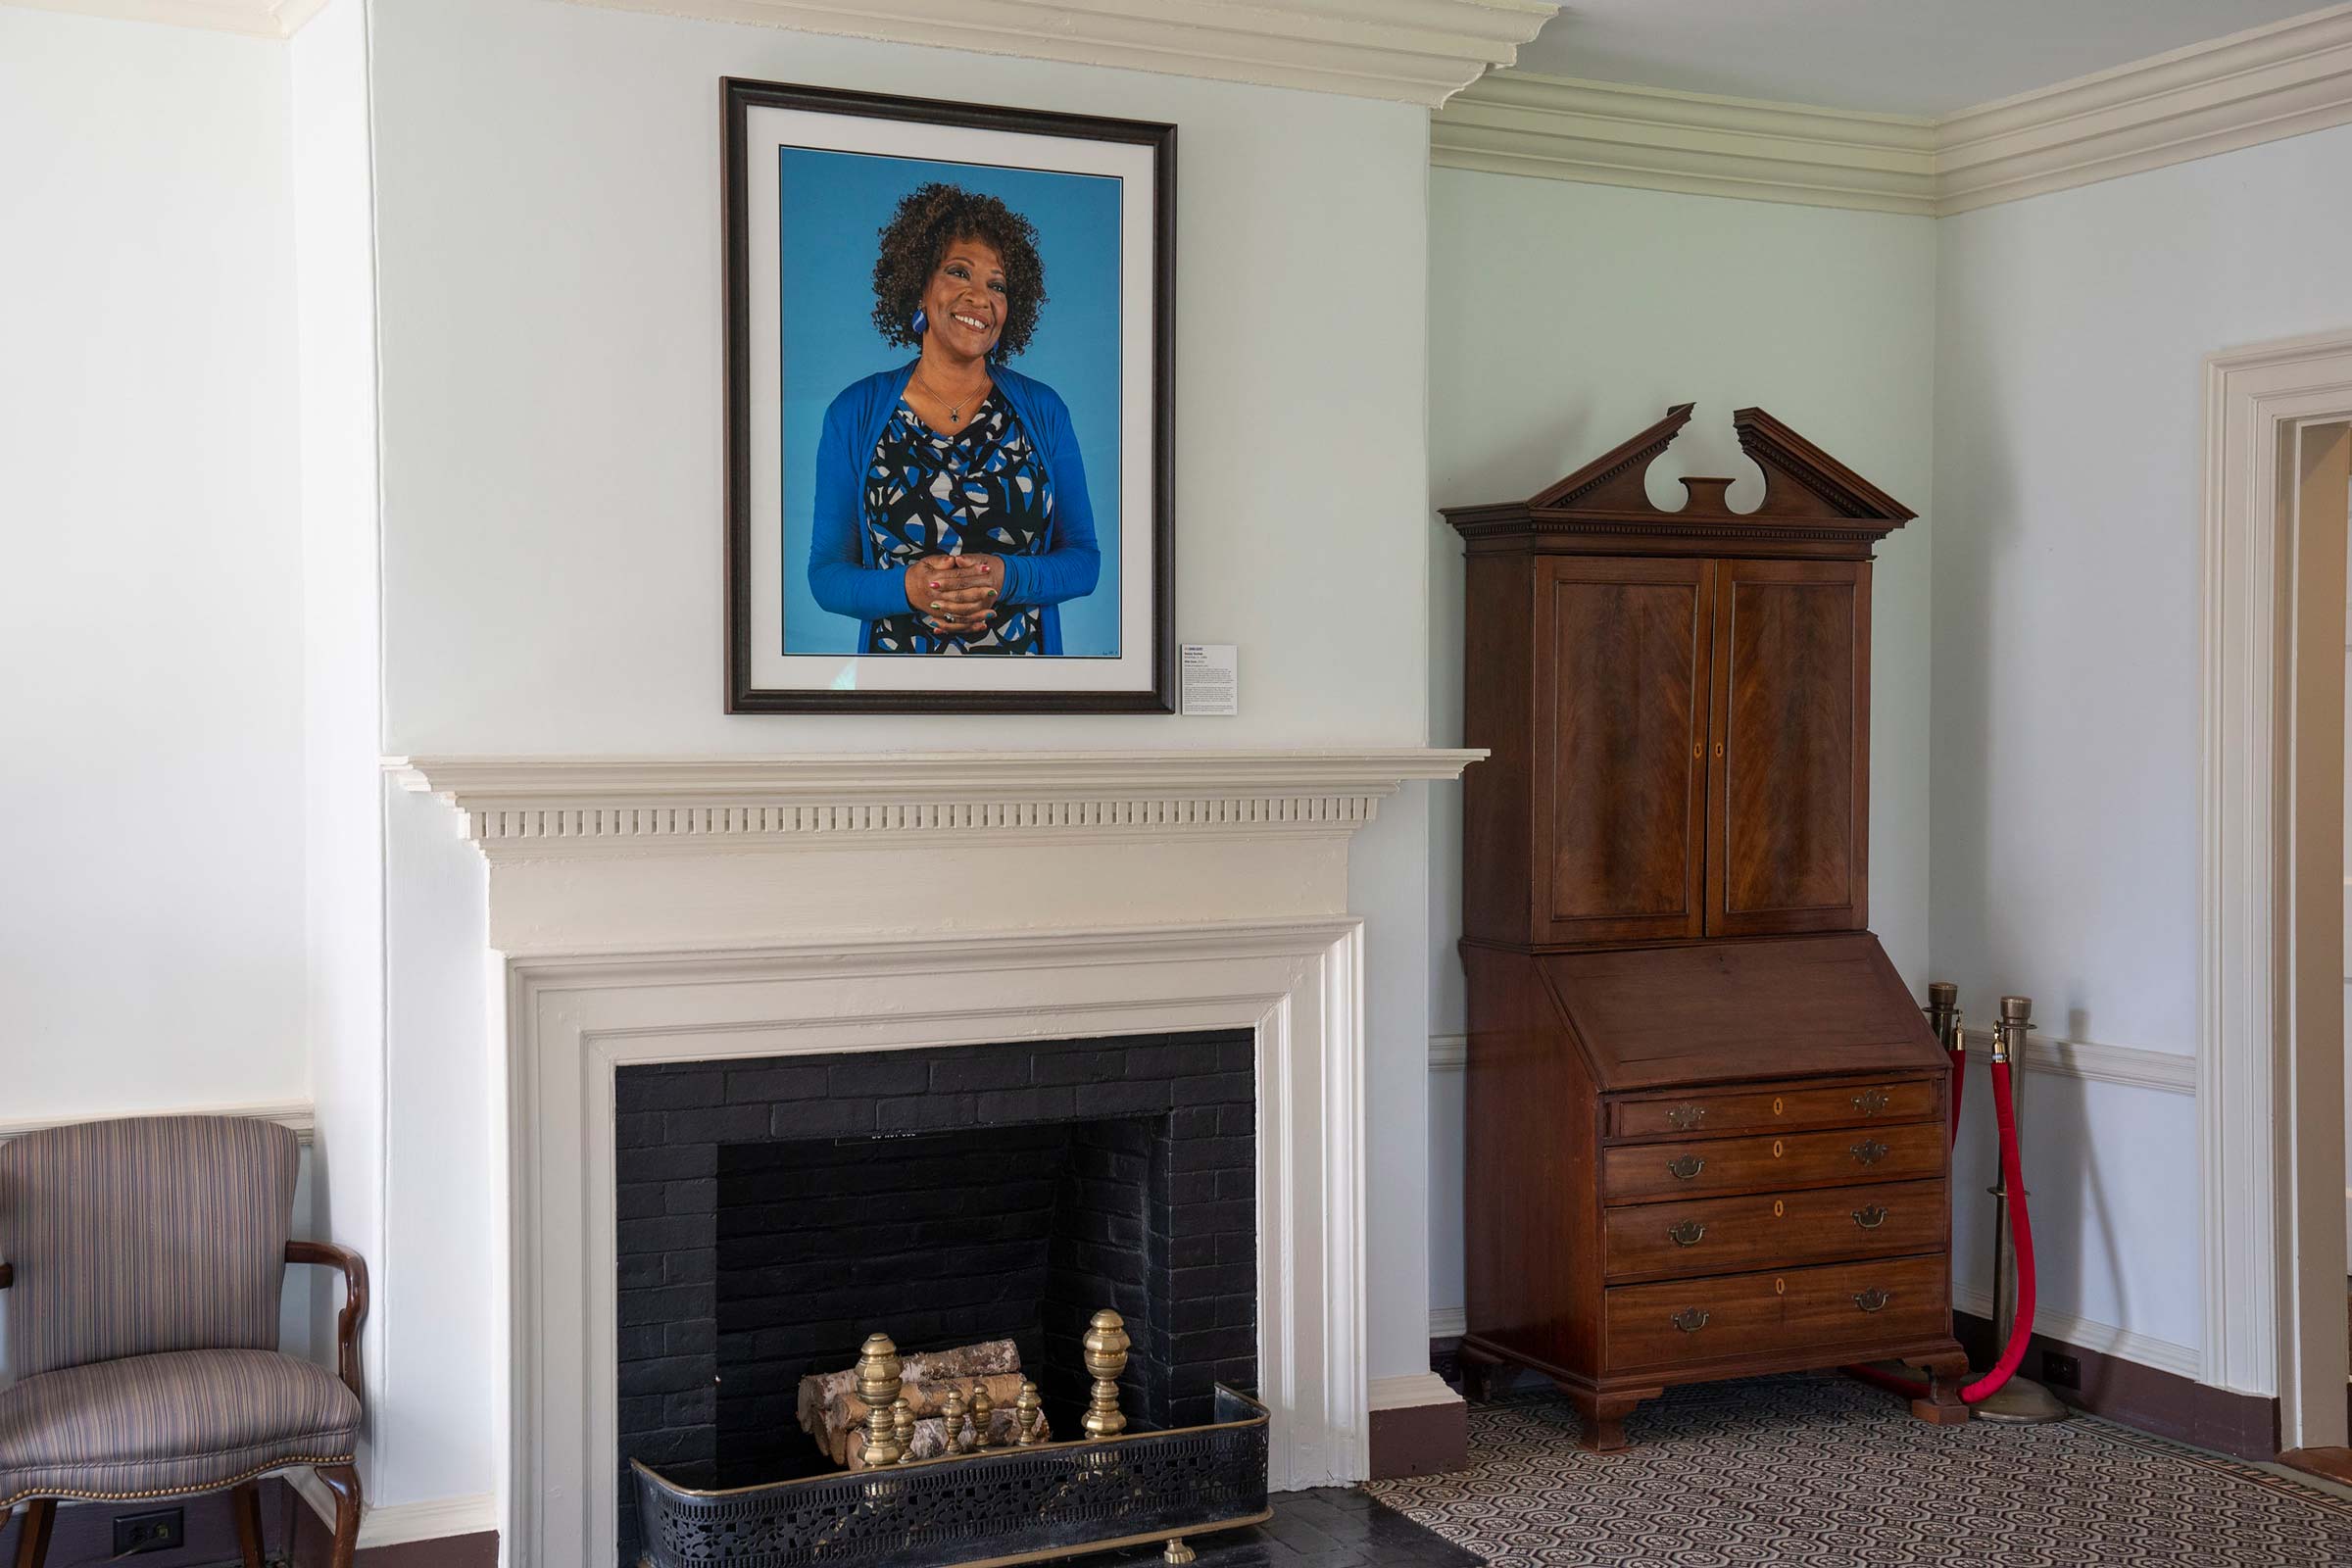 Rita Dove's portrait hung inside the front room of Pavilion VII.